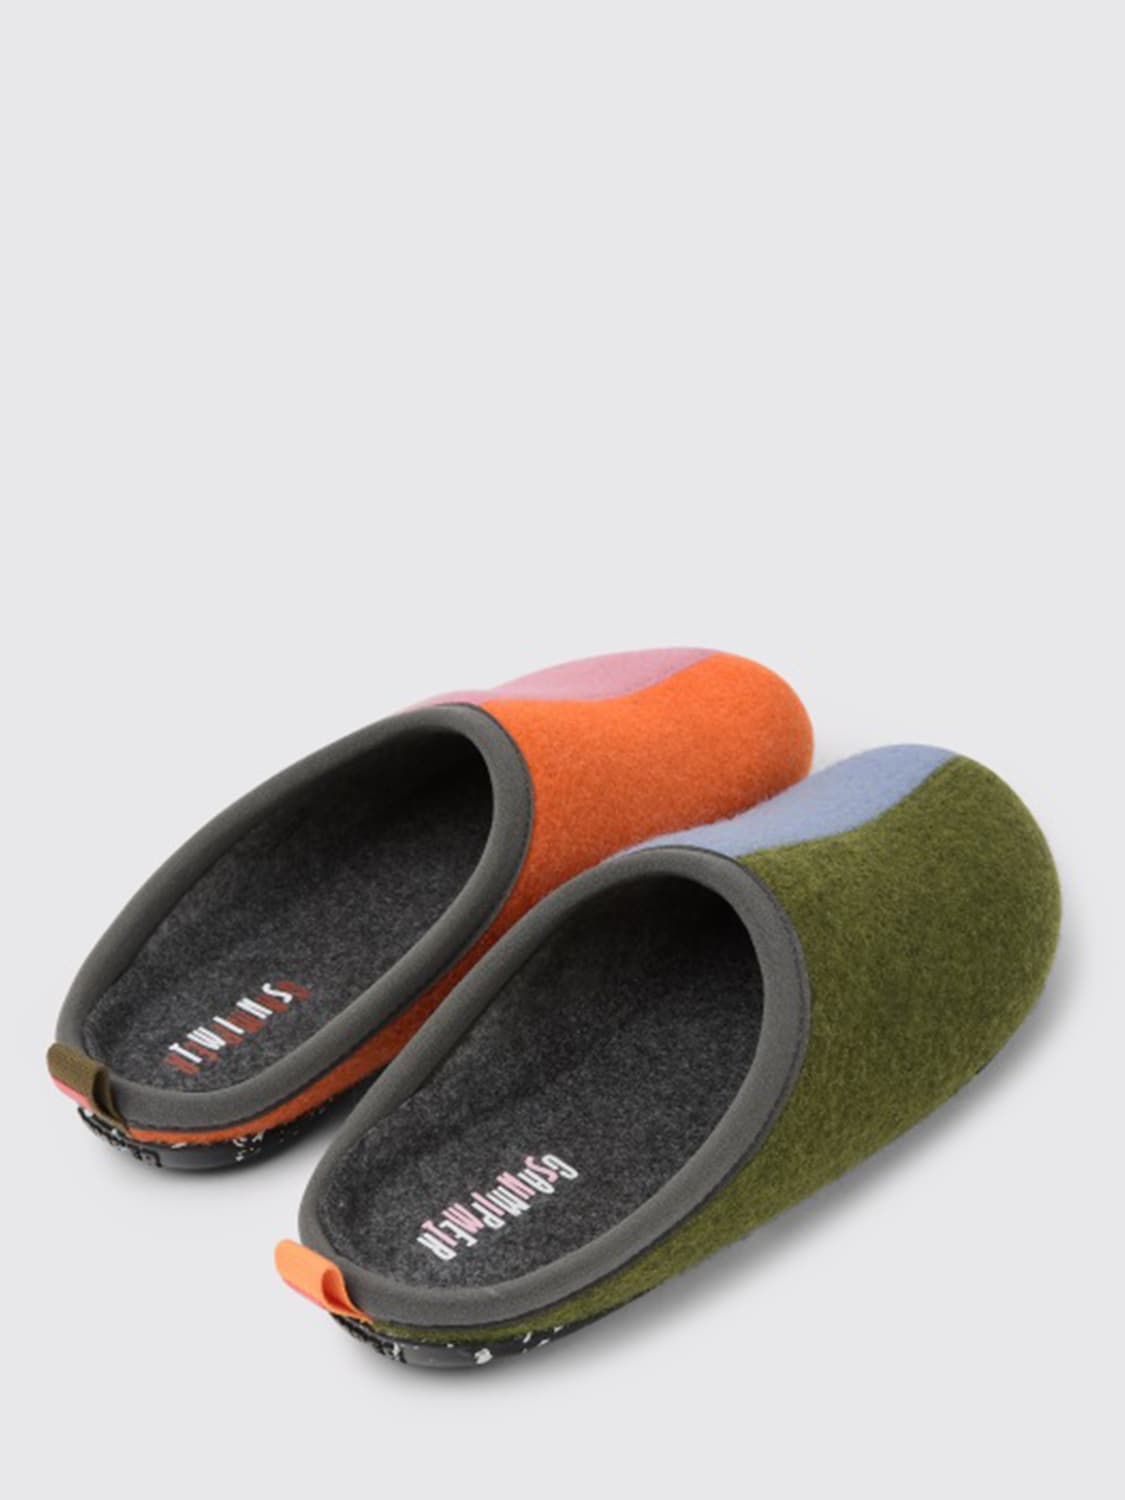 Brandy hovedlandet gentage Camper Outlet: Twins mules in multicolor wool - Multicolor | Camper flat  shoes K201398-002 TWINS online on GIGLIO.COM